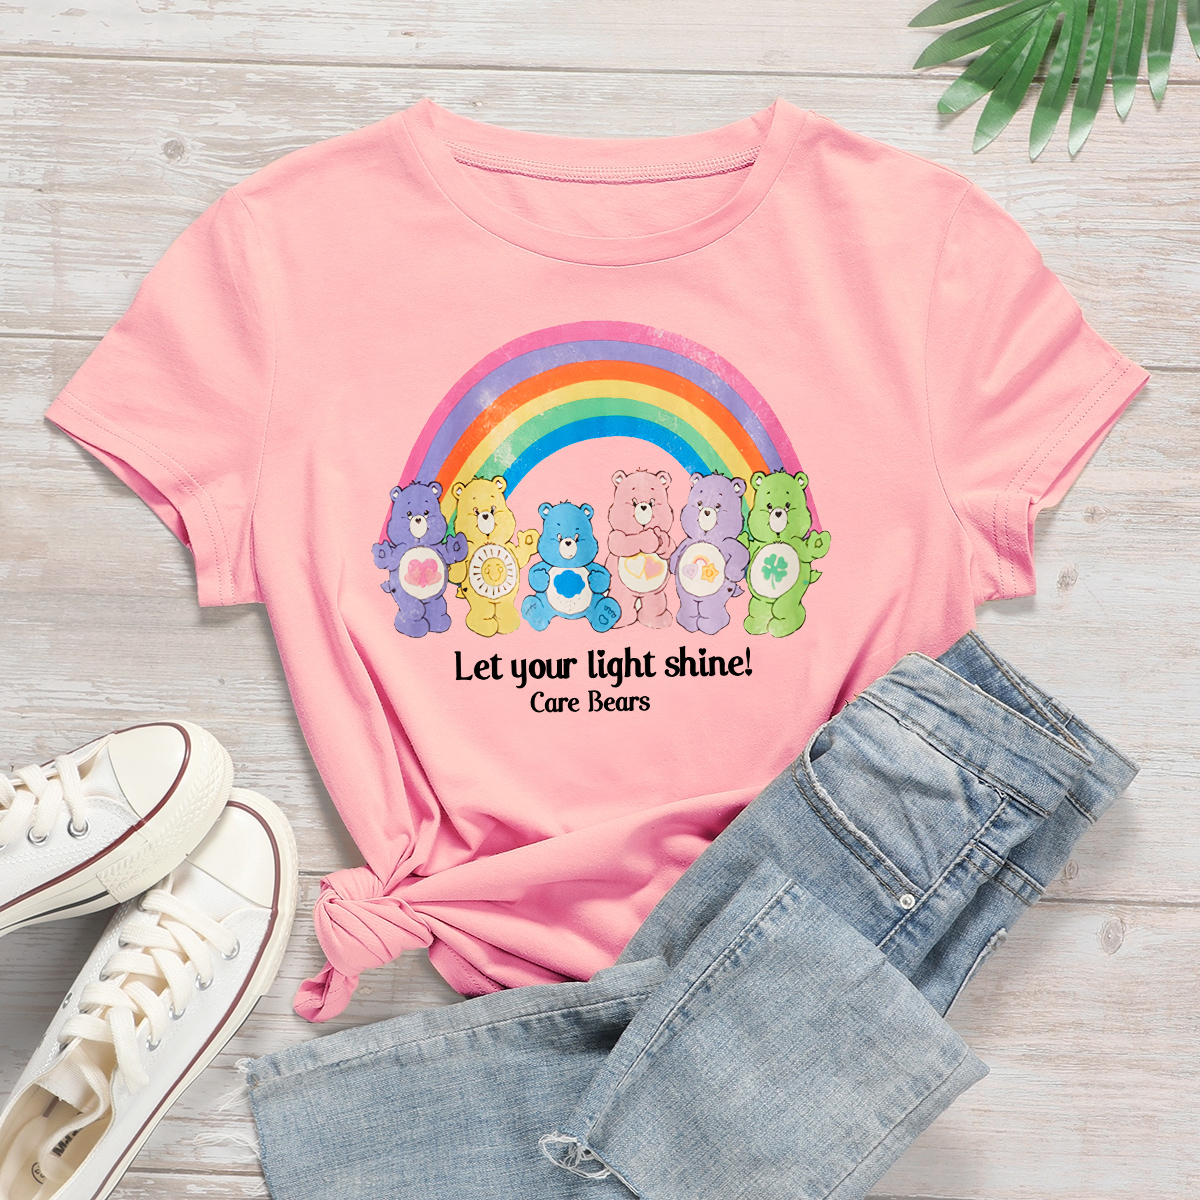 Personalized Care bears shirt, Let Your Light Shine shirt, Rainbow Bears Top Best Boyfriend T-Shirt, teddy bear,1980s cartoons, friendship, love shirt